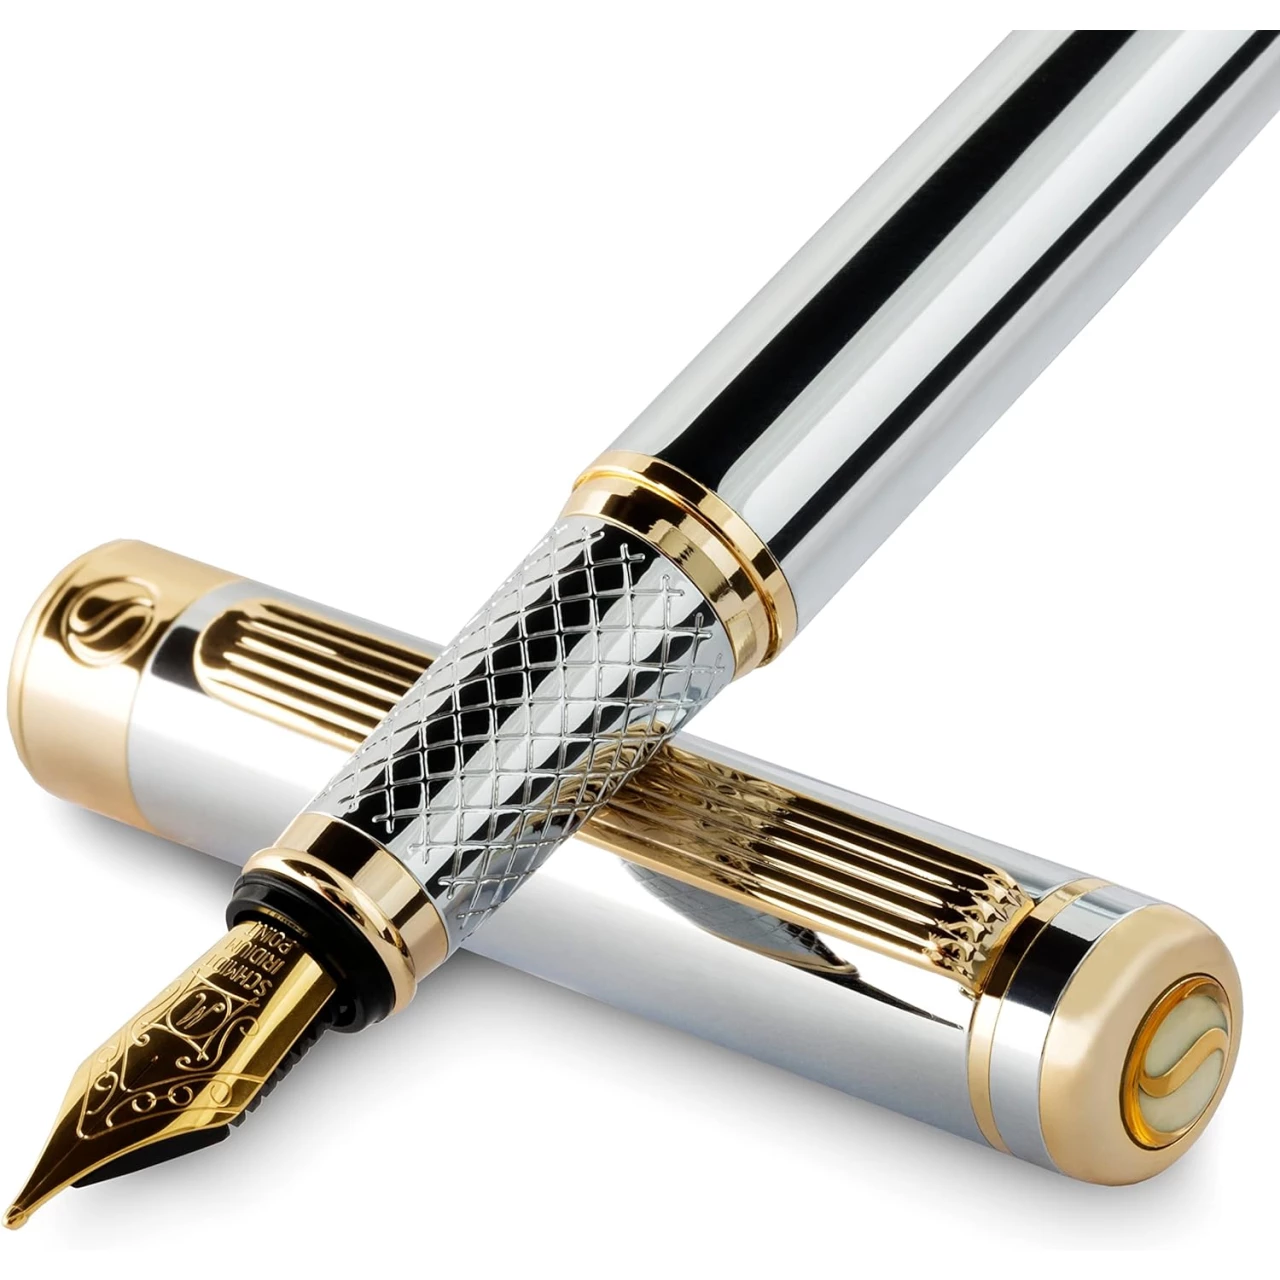 Scriveiner Silver Chrome Fountain Pen - 24K Gold Finish